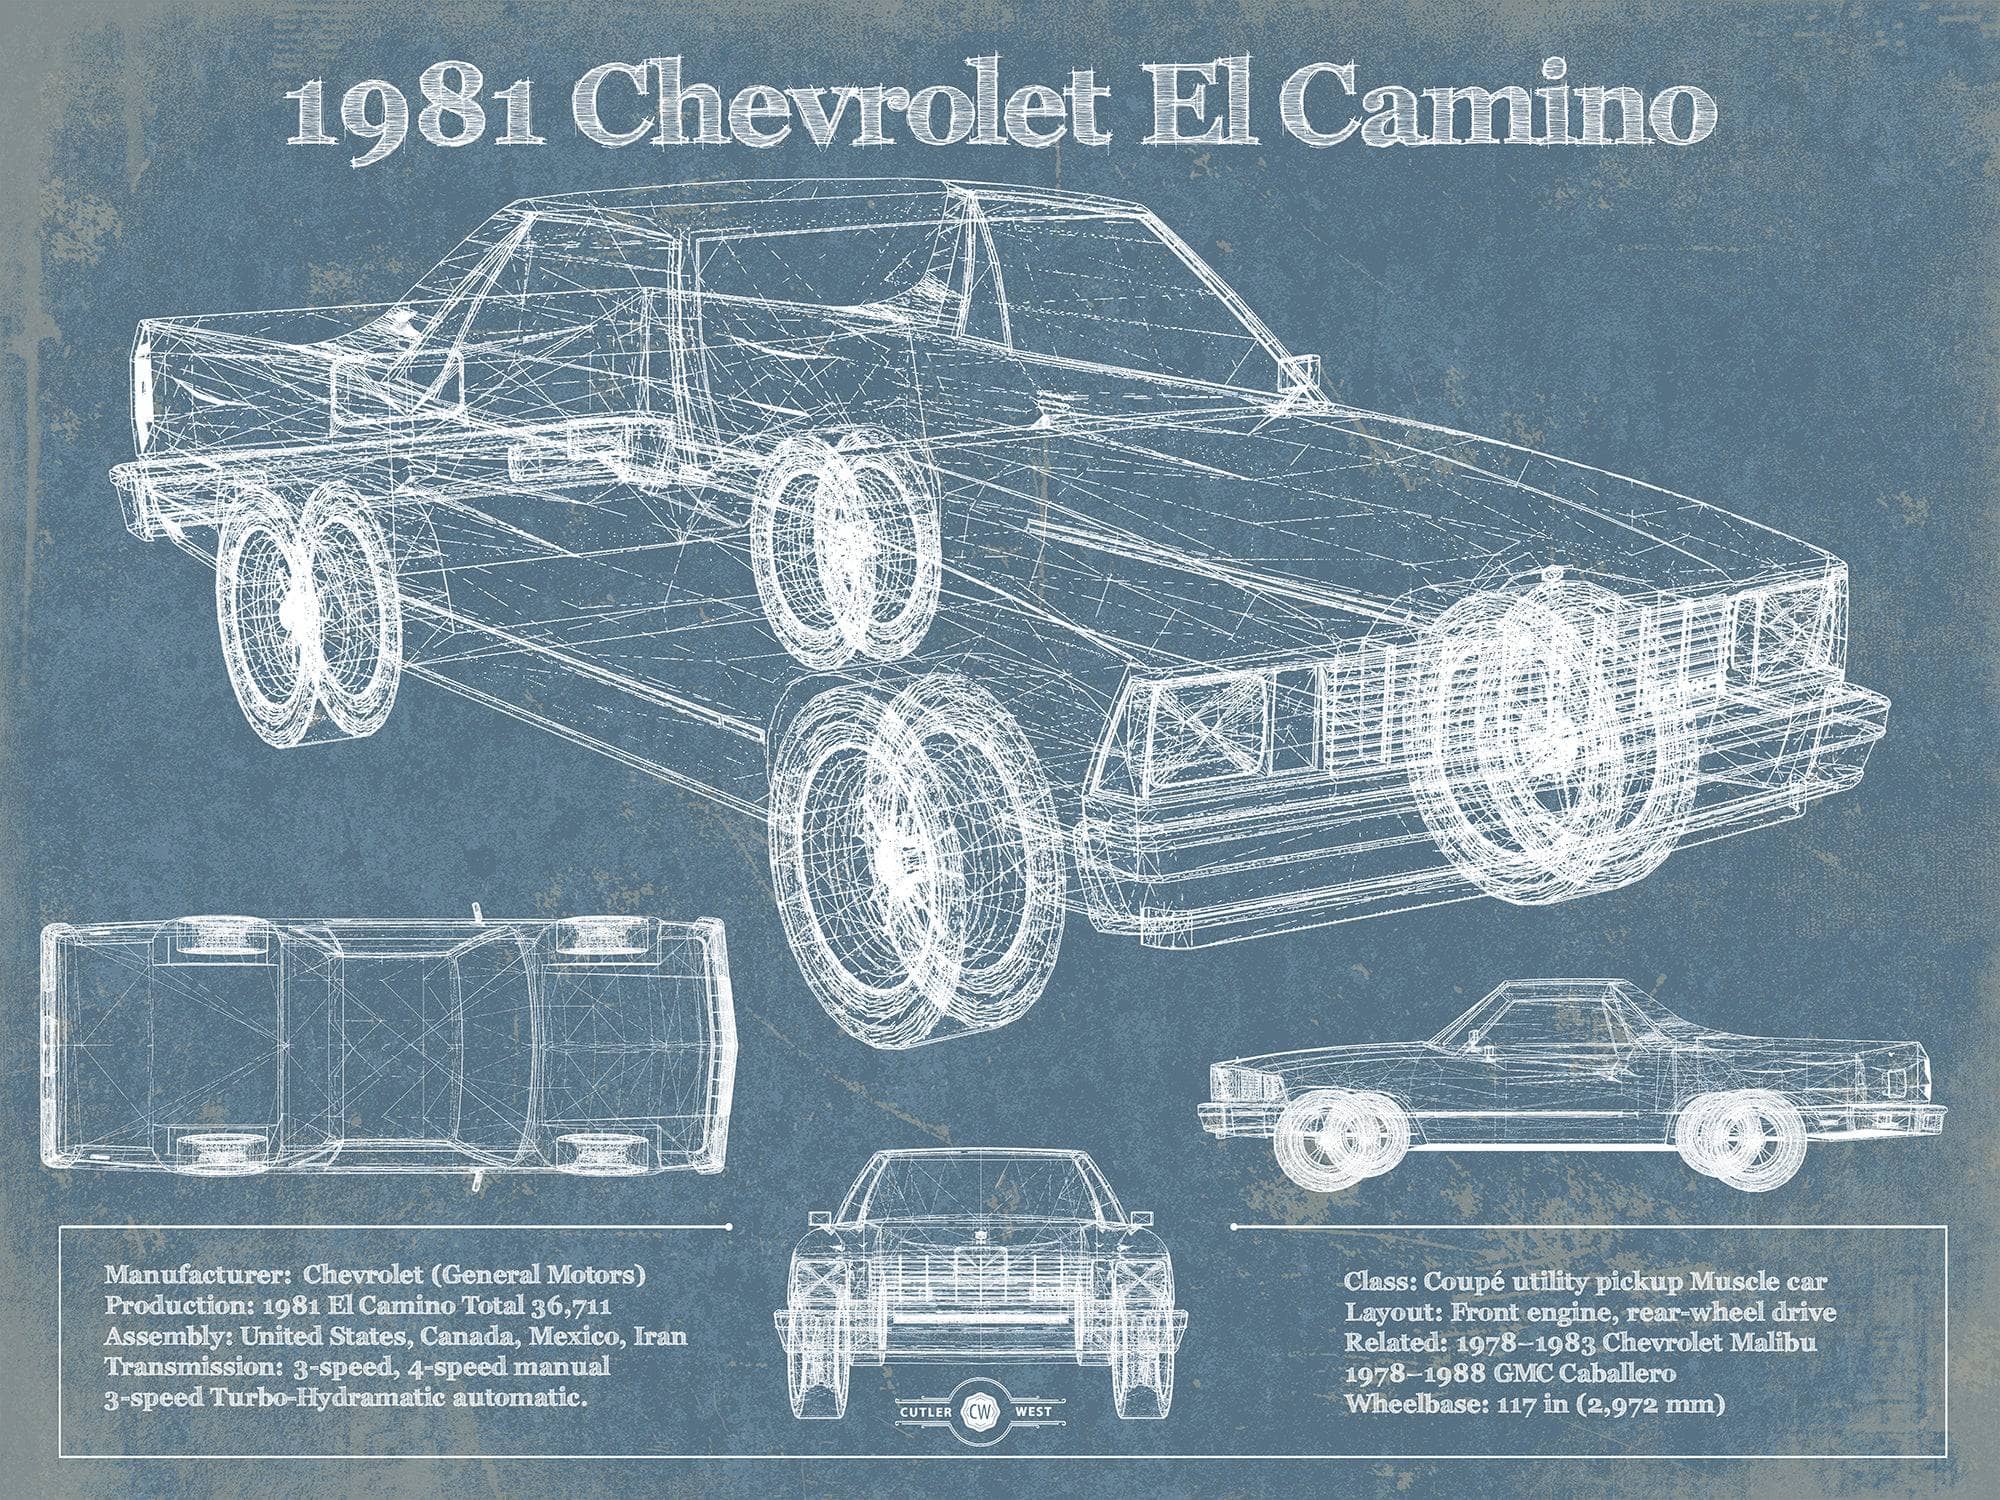 Cutler West Chevrolet Collection 1981 Chevrolet El Camino Vintage Blueprint Auto Print